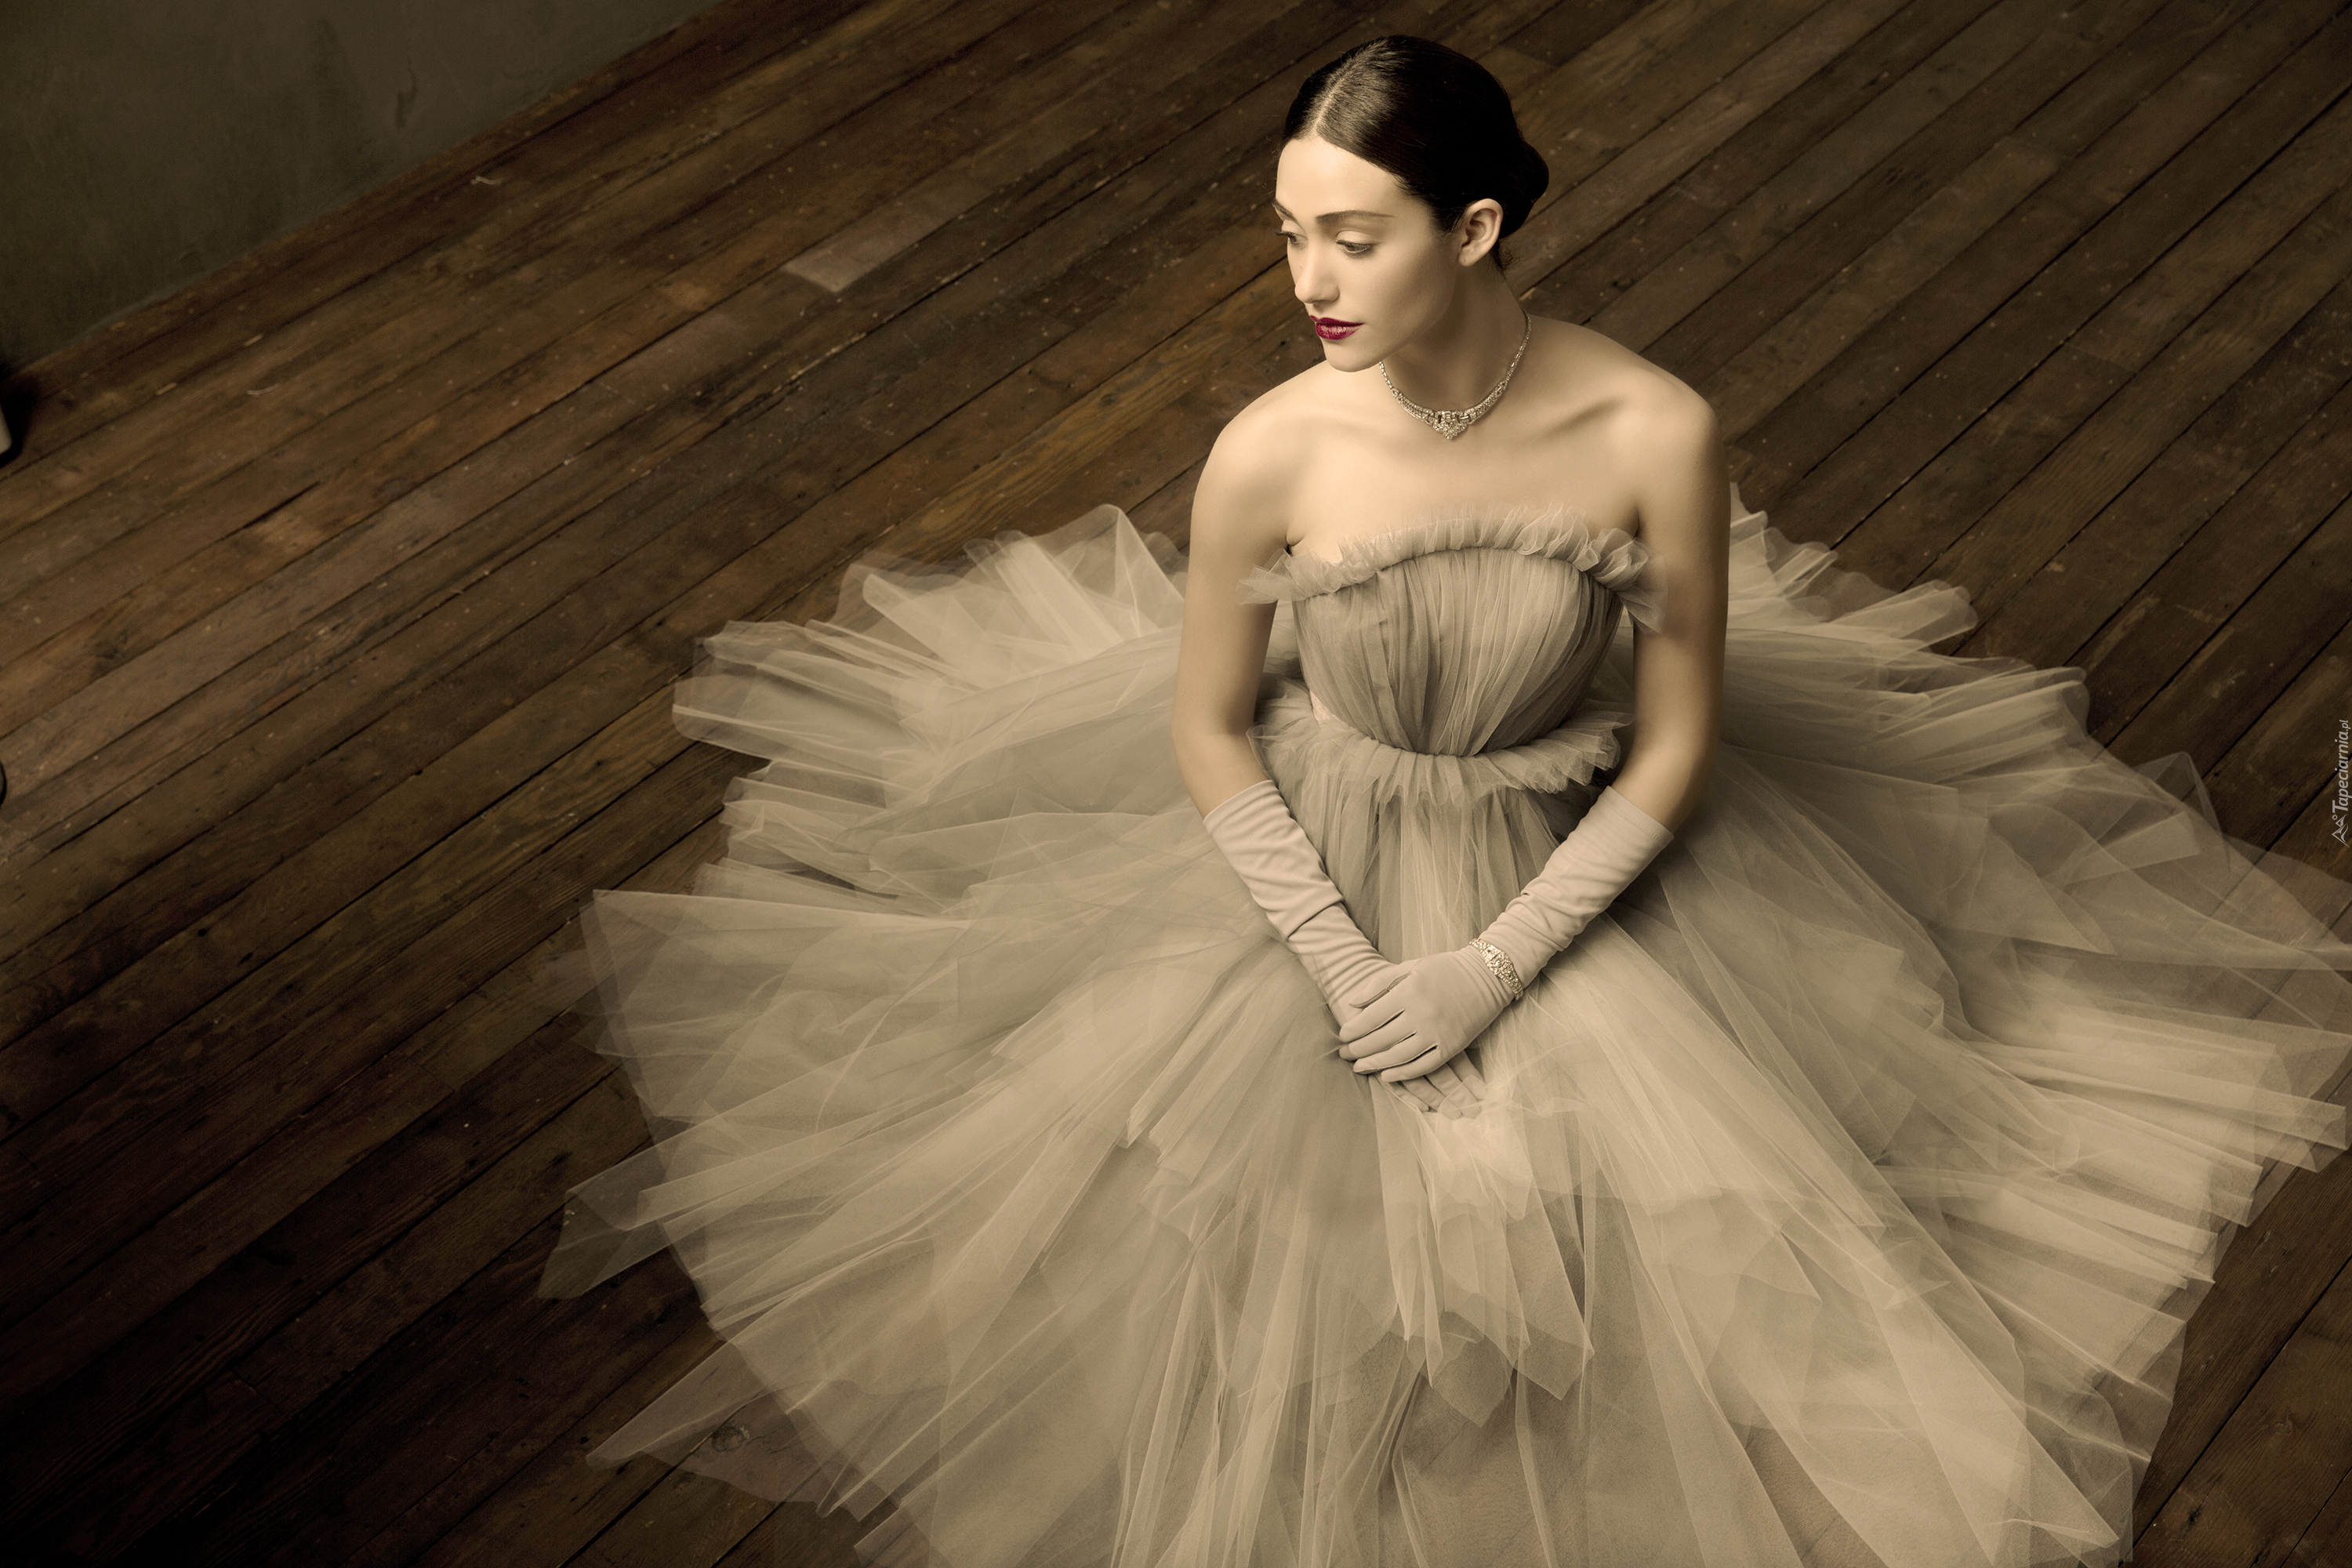 Emmy Rossum, Baletnica, Sukienka